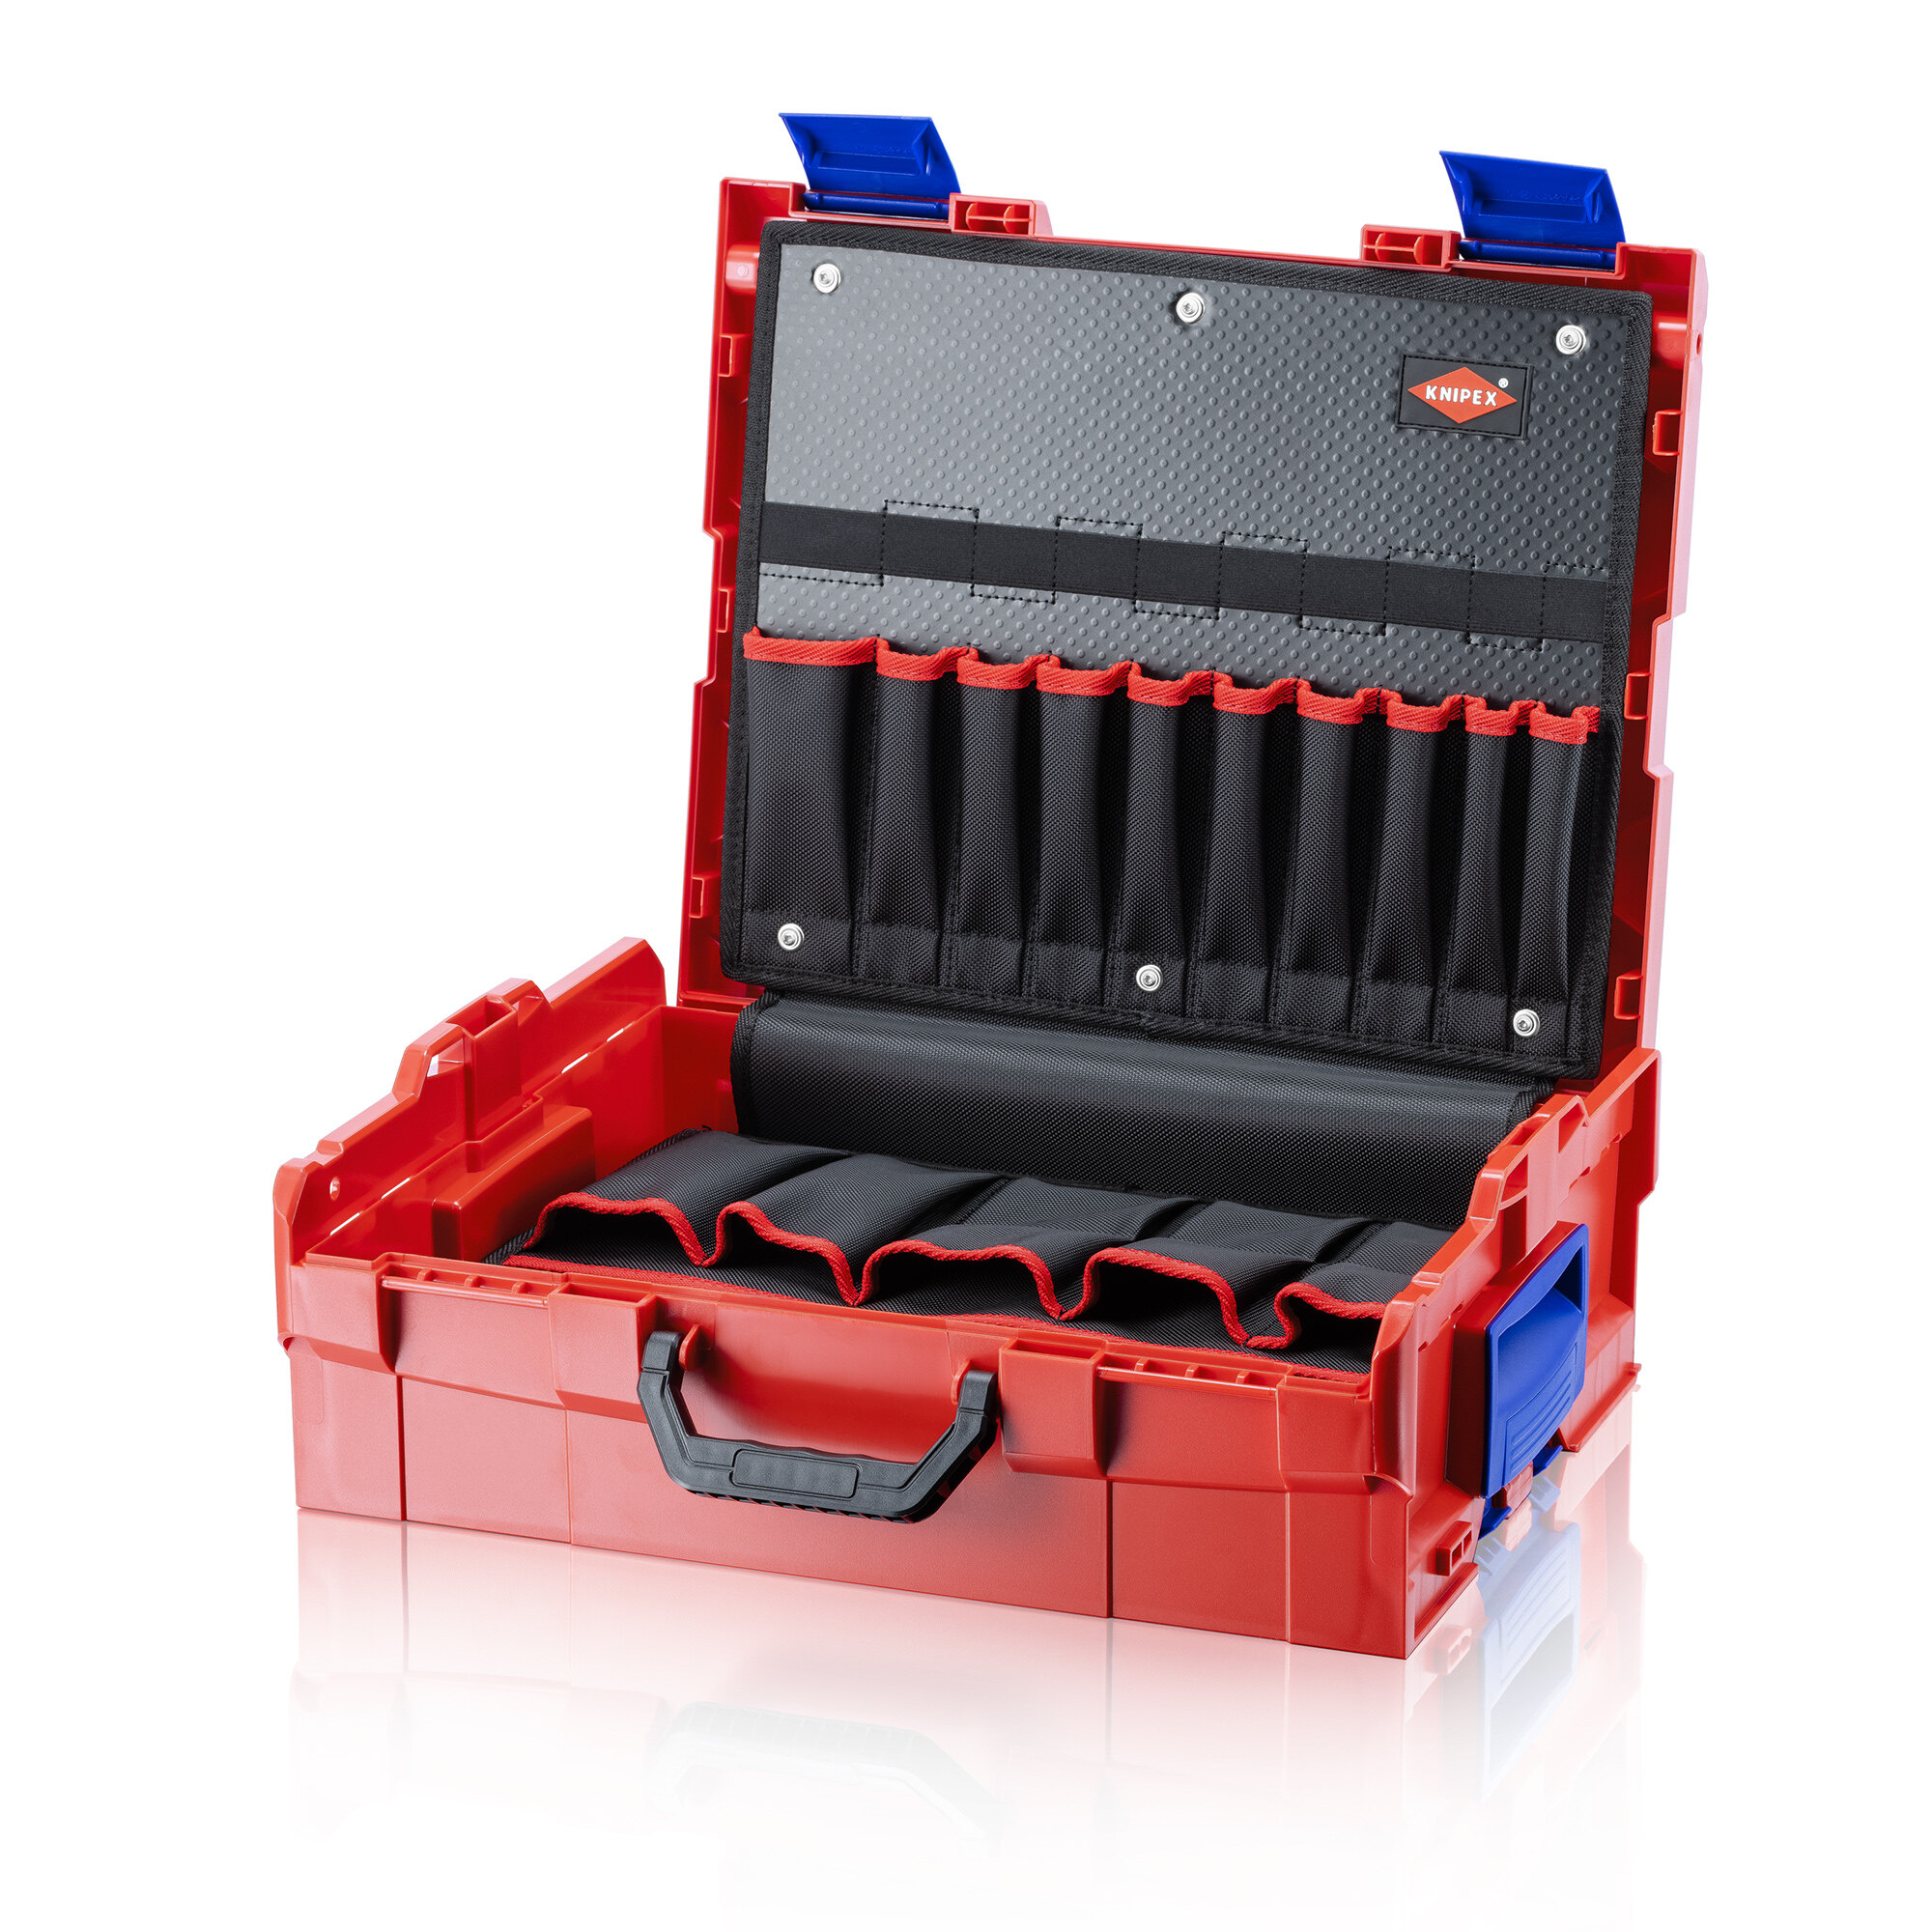 KNIPEX L-Boxx - Complete Set กล่องเครื่องมือพร้อมซองใส่เครื่องมือ รุ่น 002119LB